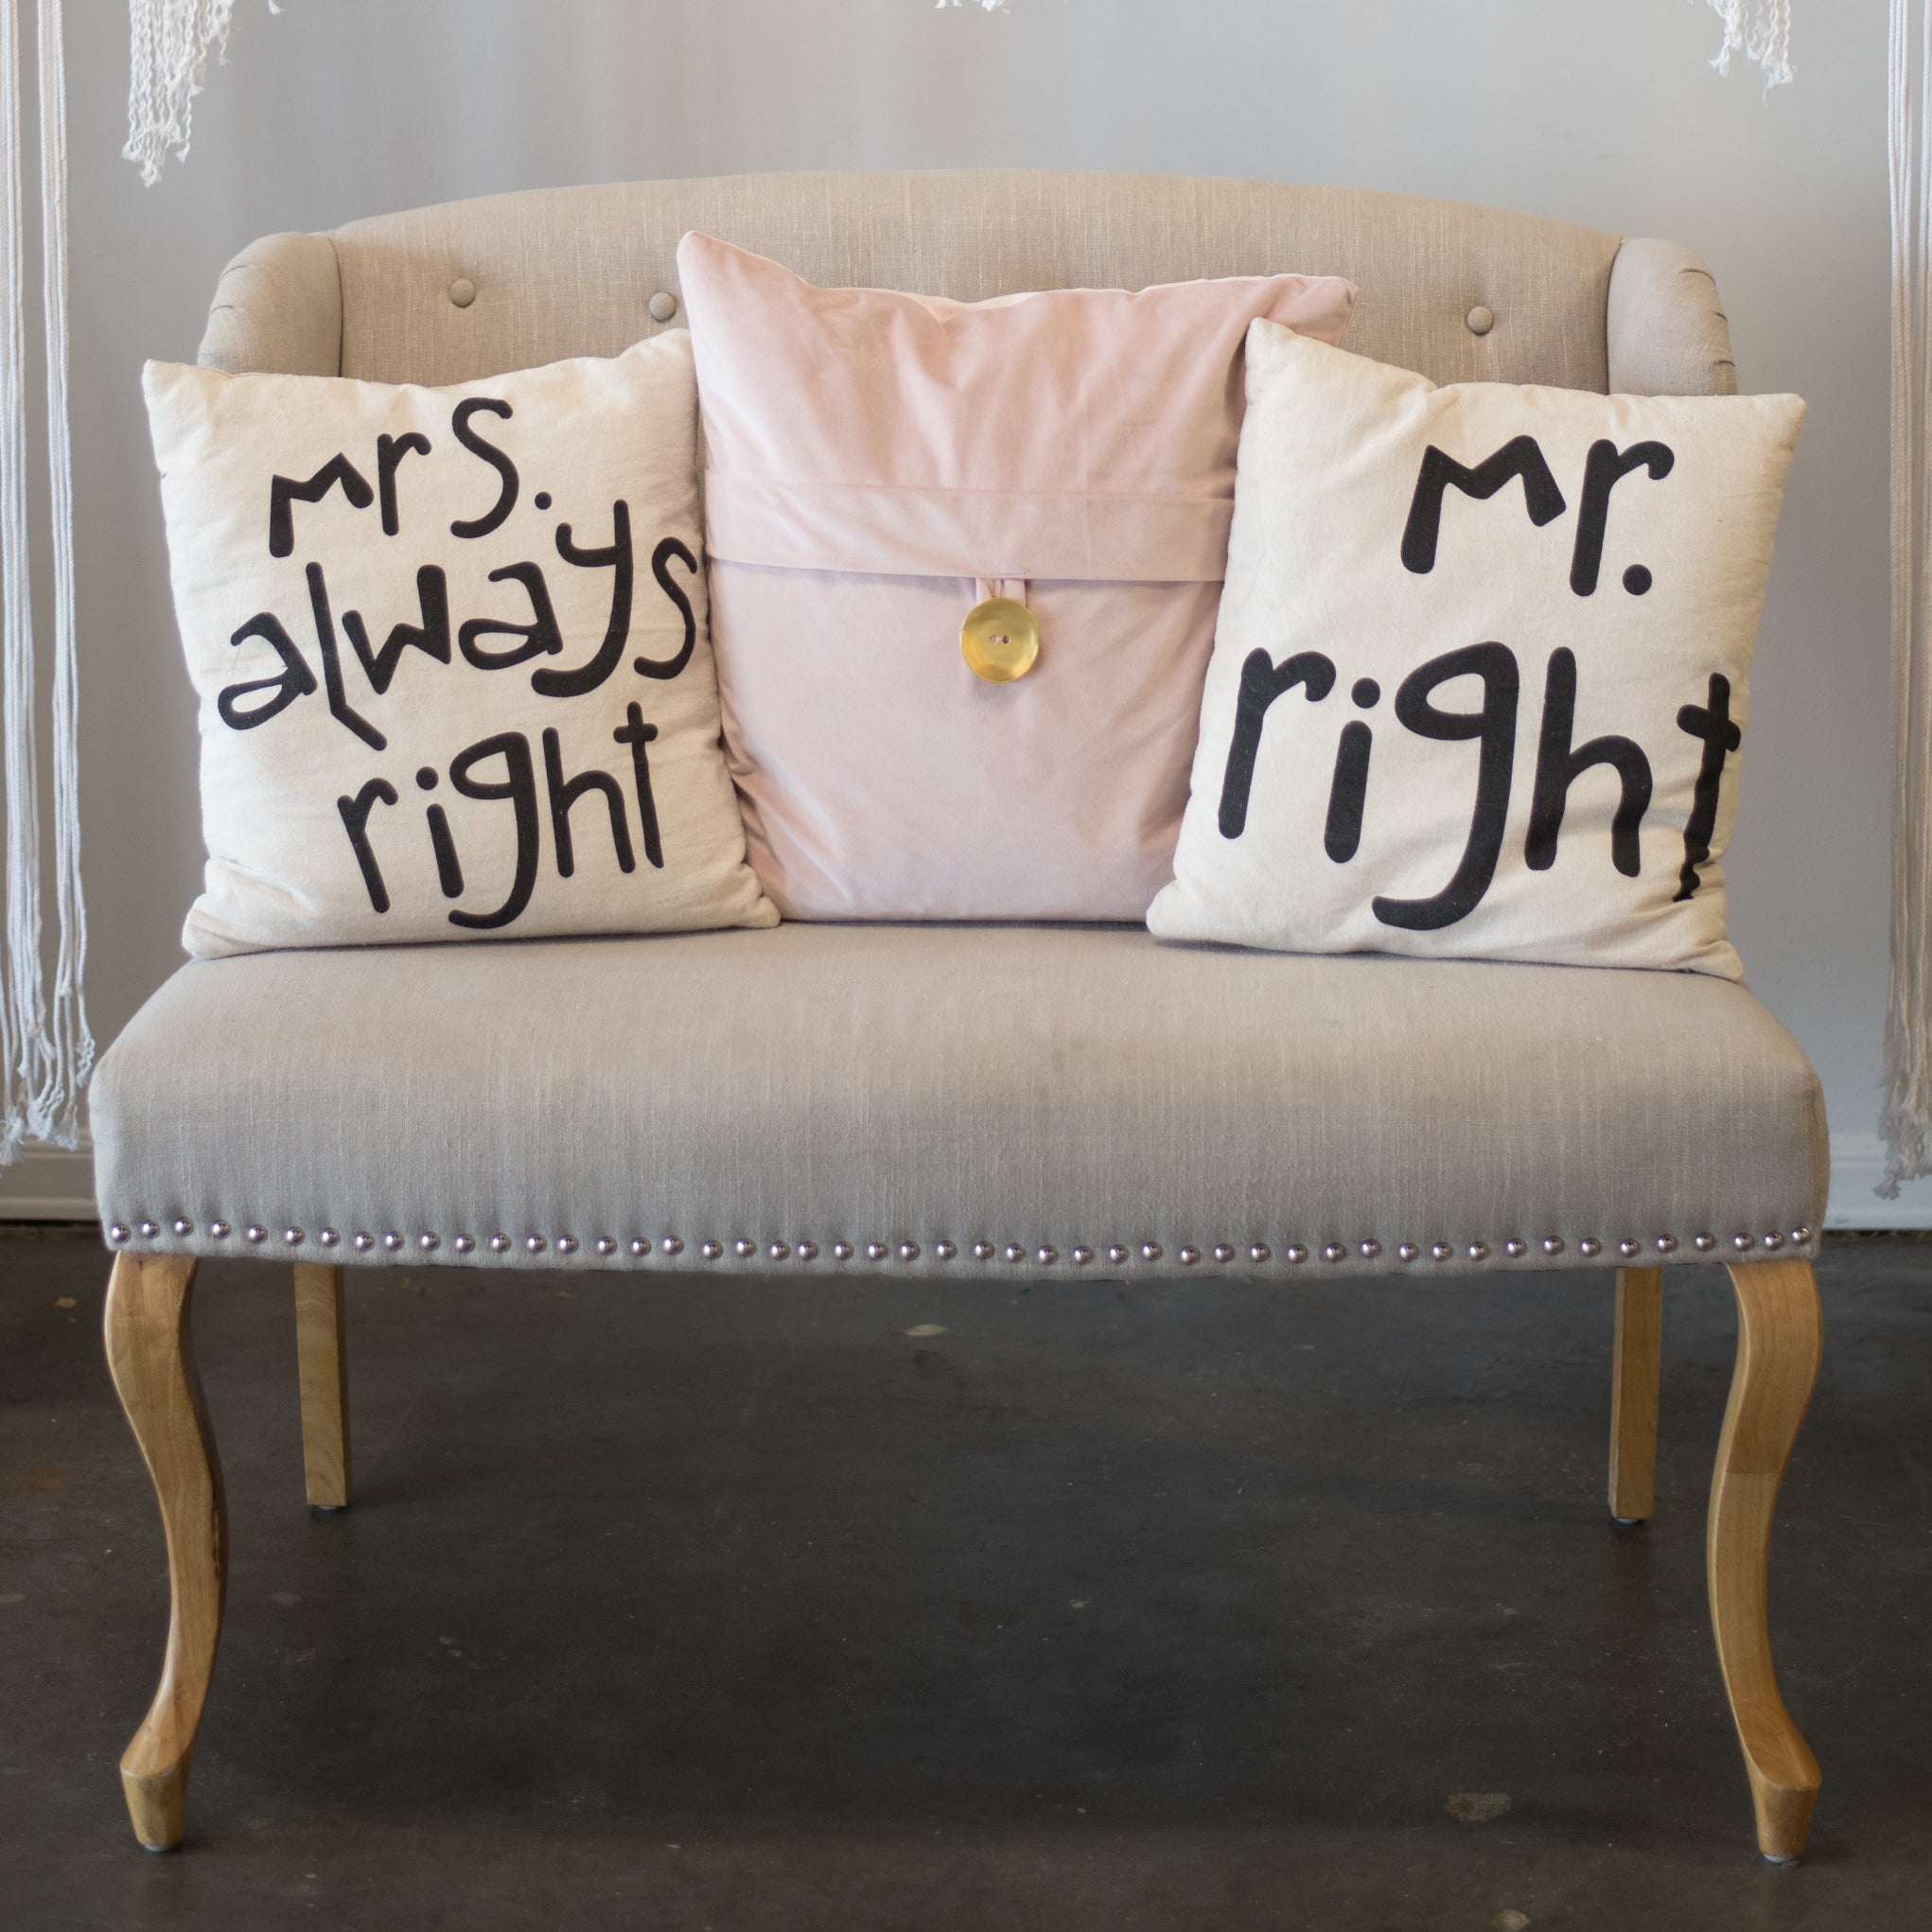 Upholstered Sweetheart Bench - The Wedding Shop